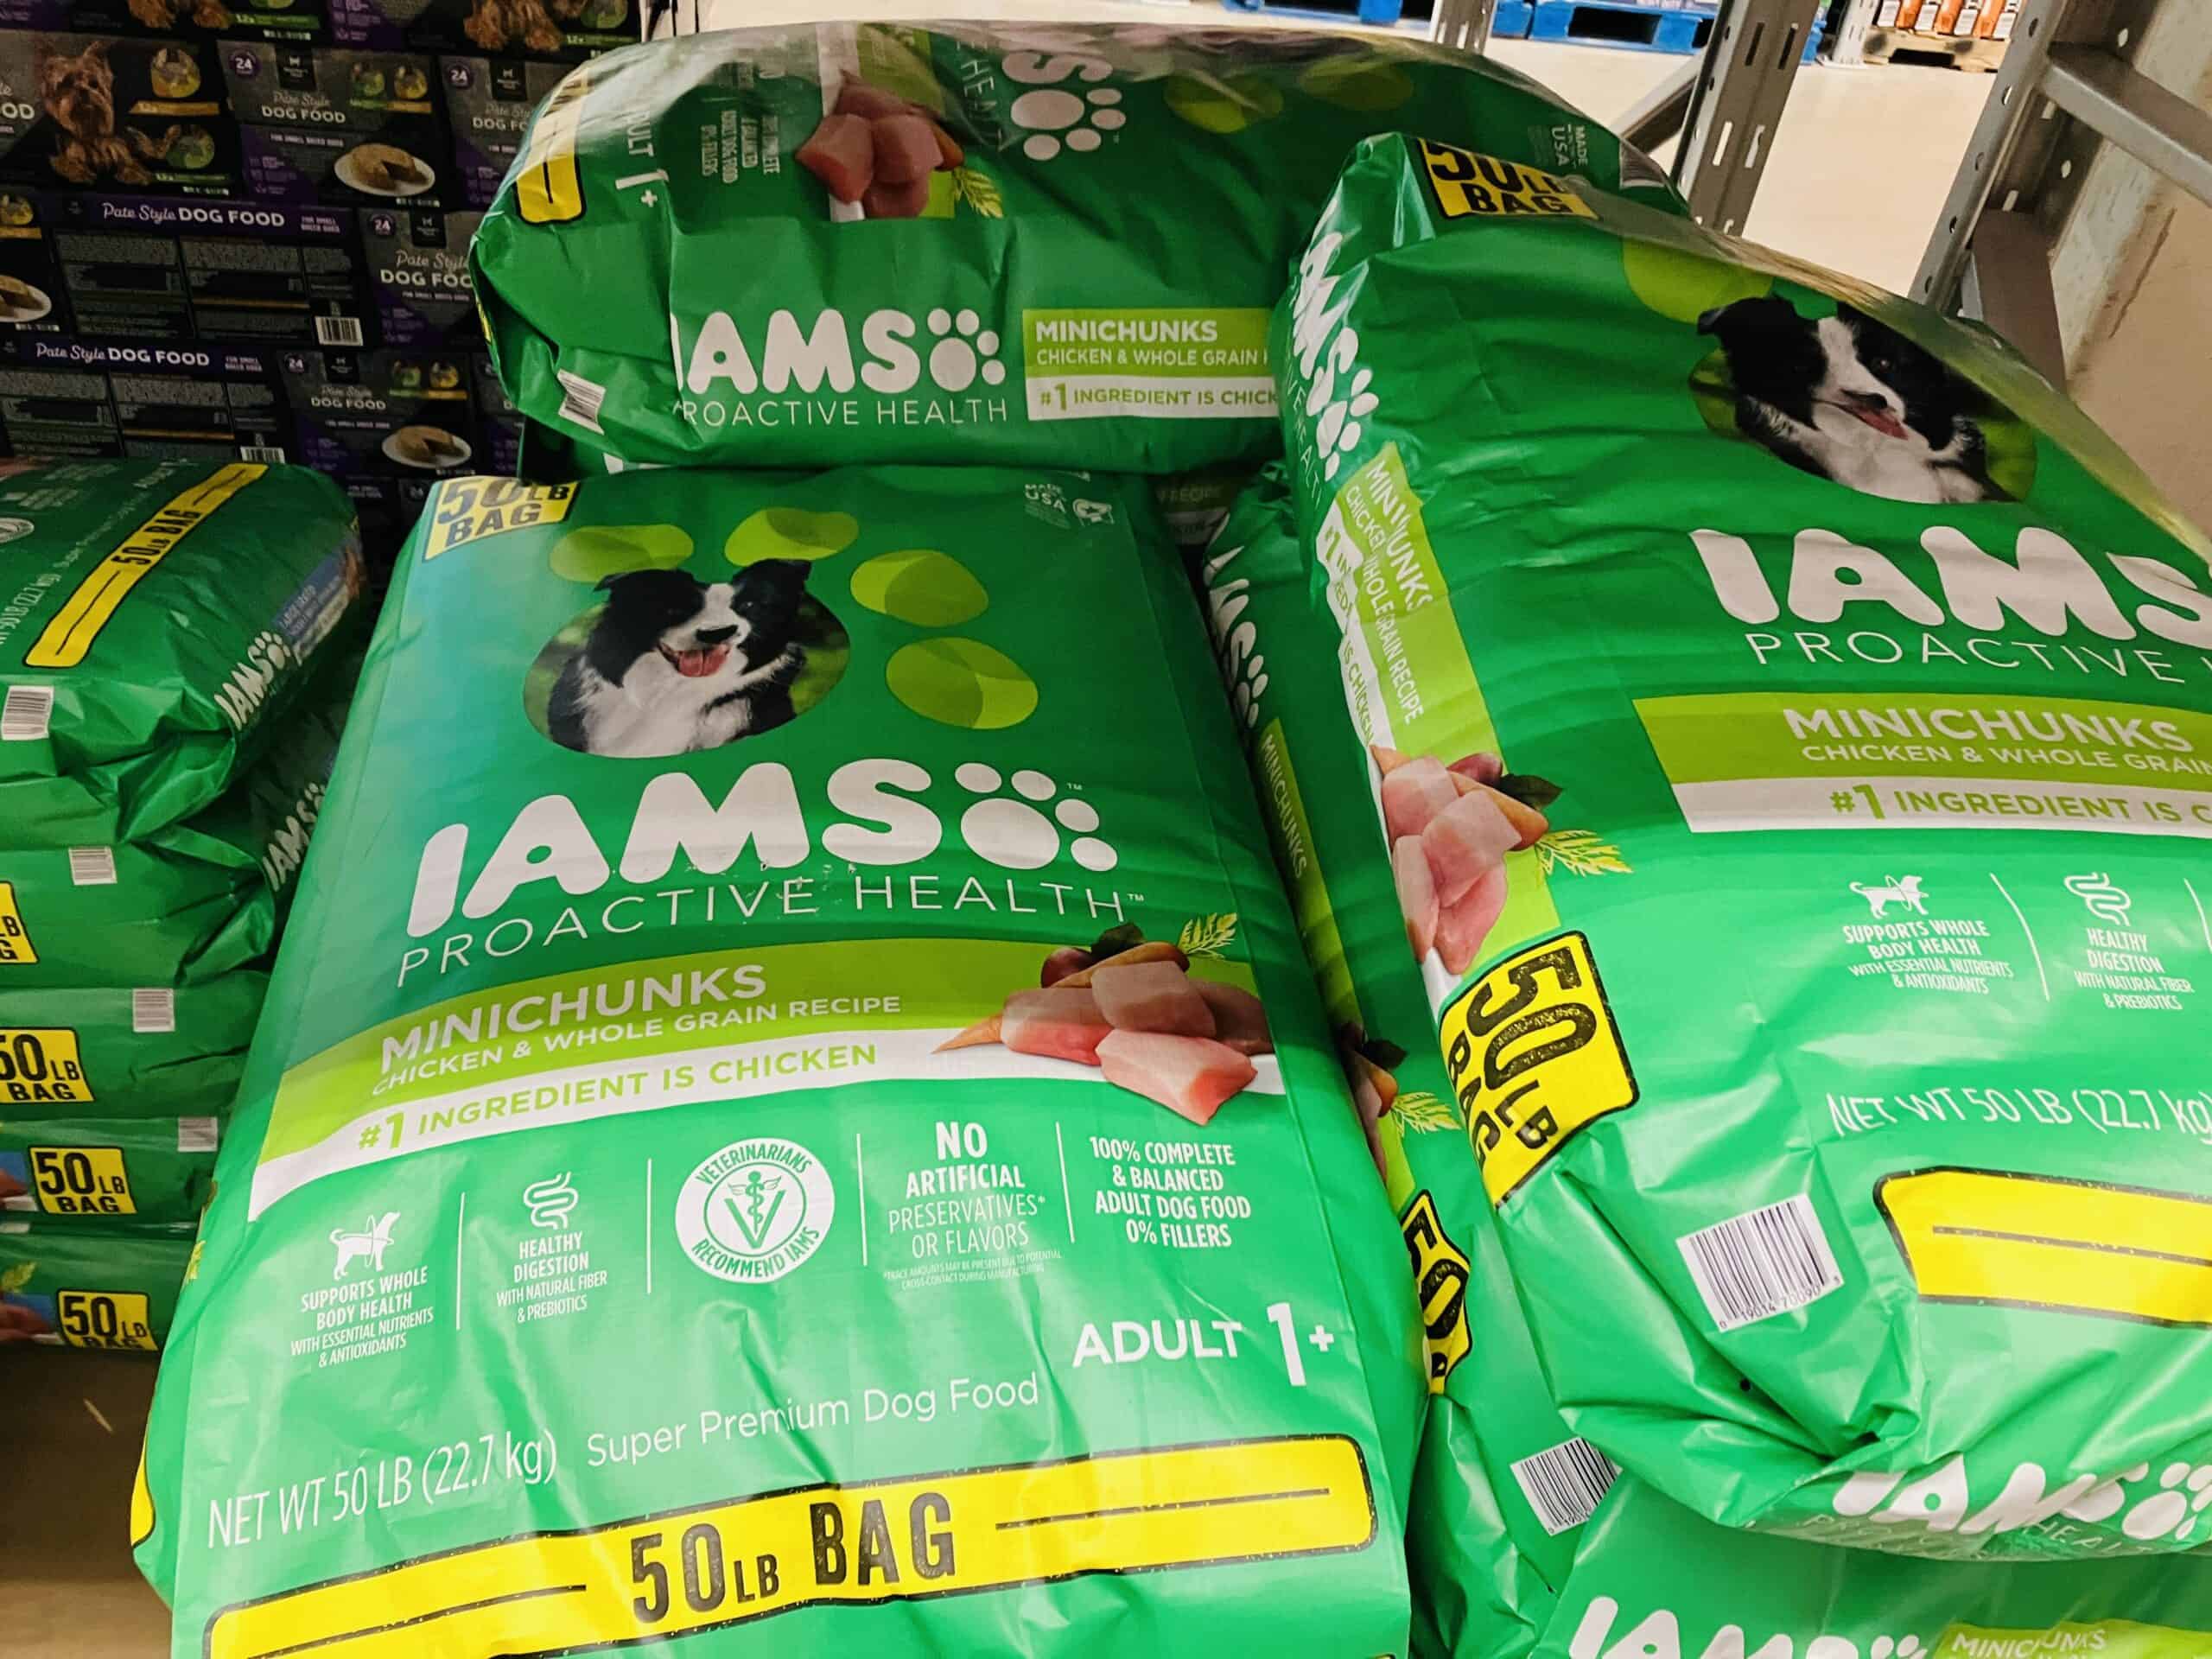 Iams Proactive Health dog food